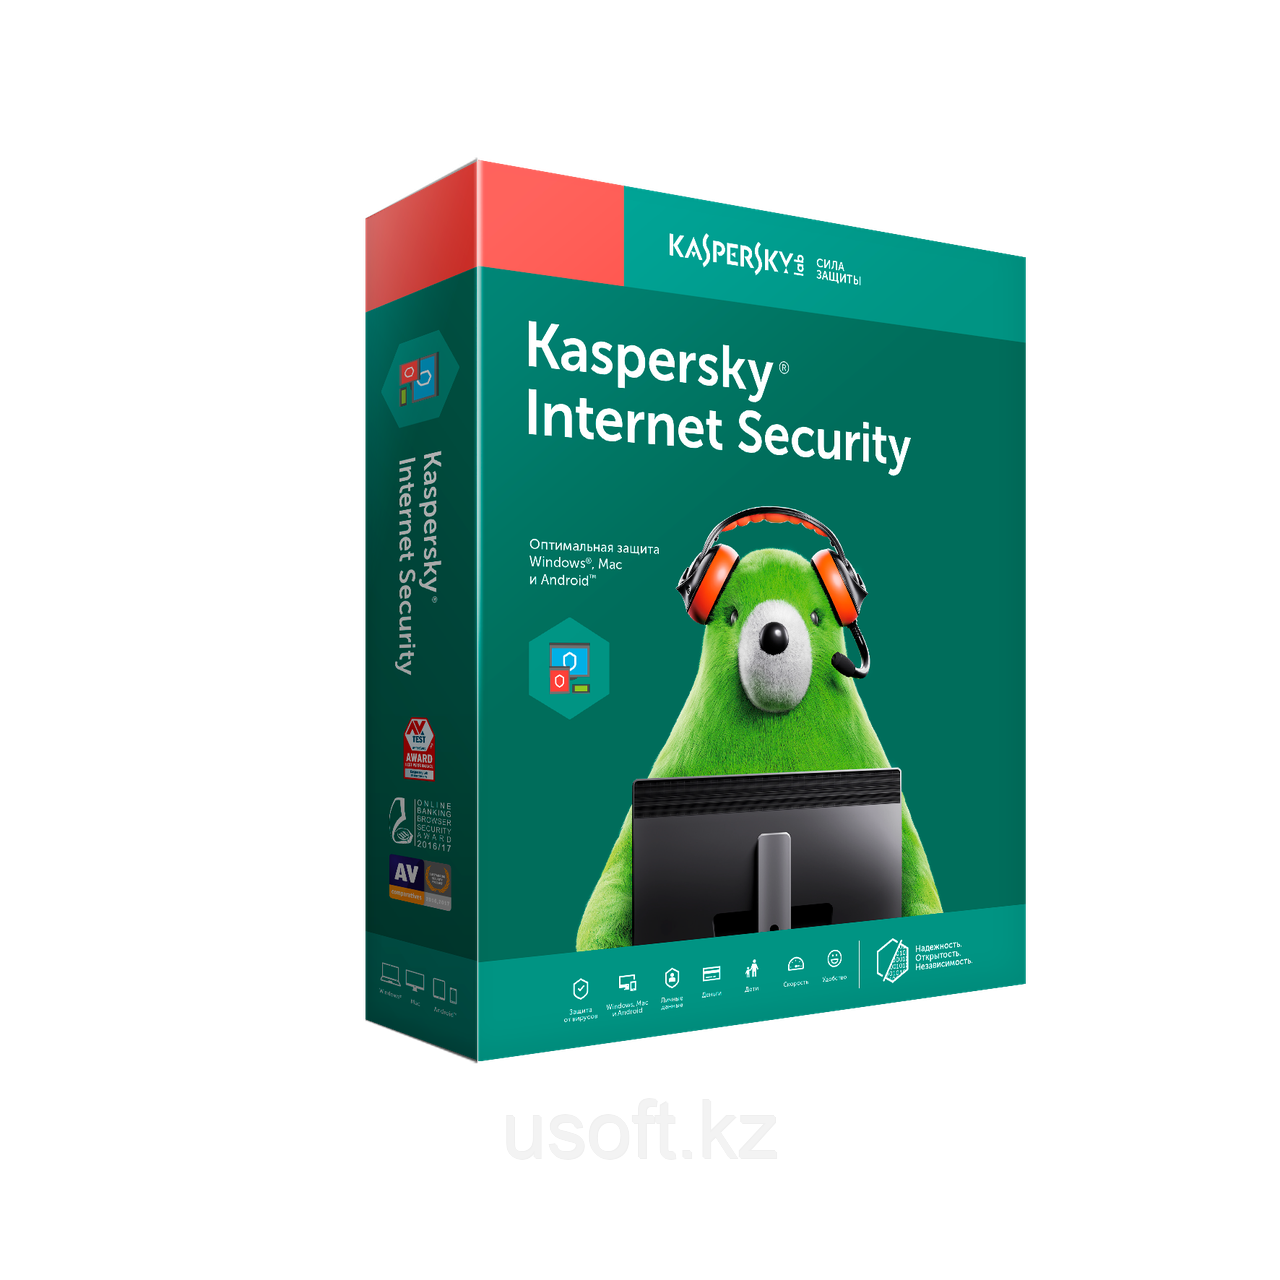 Антивирус Kaspersky Internet Security (2 ПК - 1 год) карта / электронный ключ